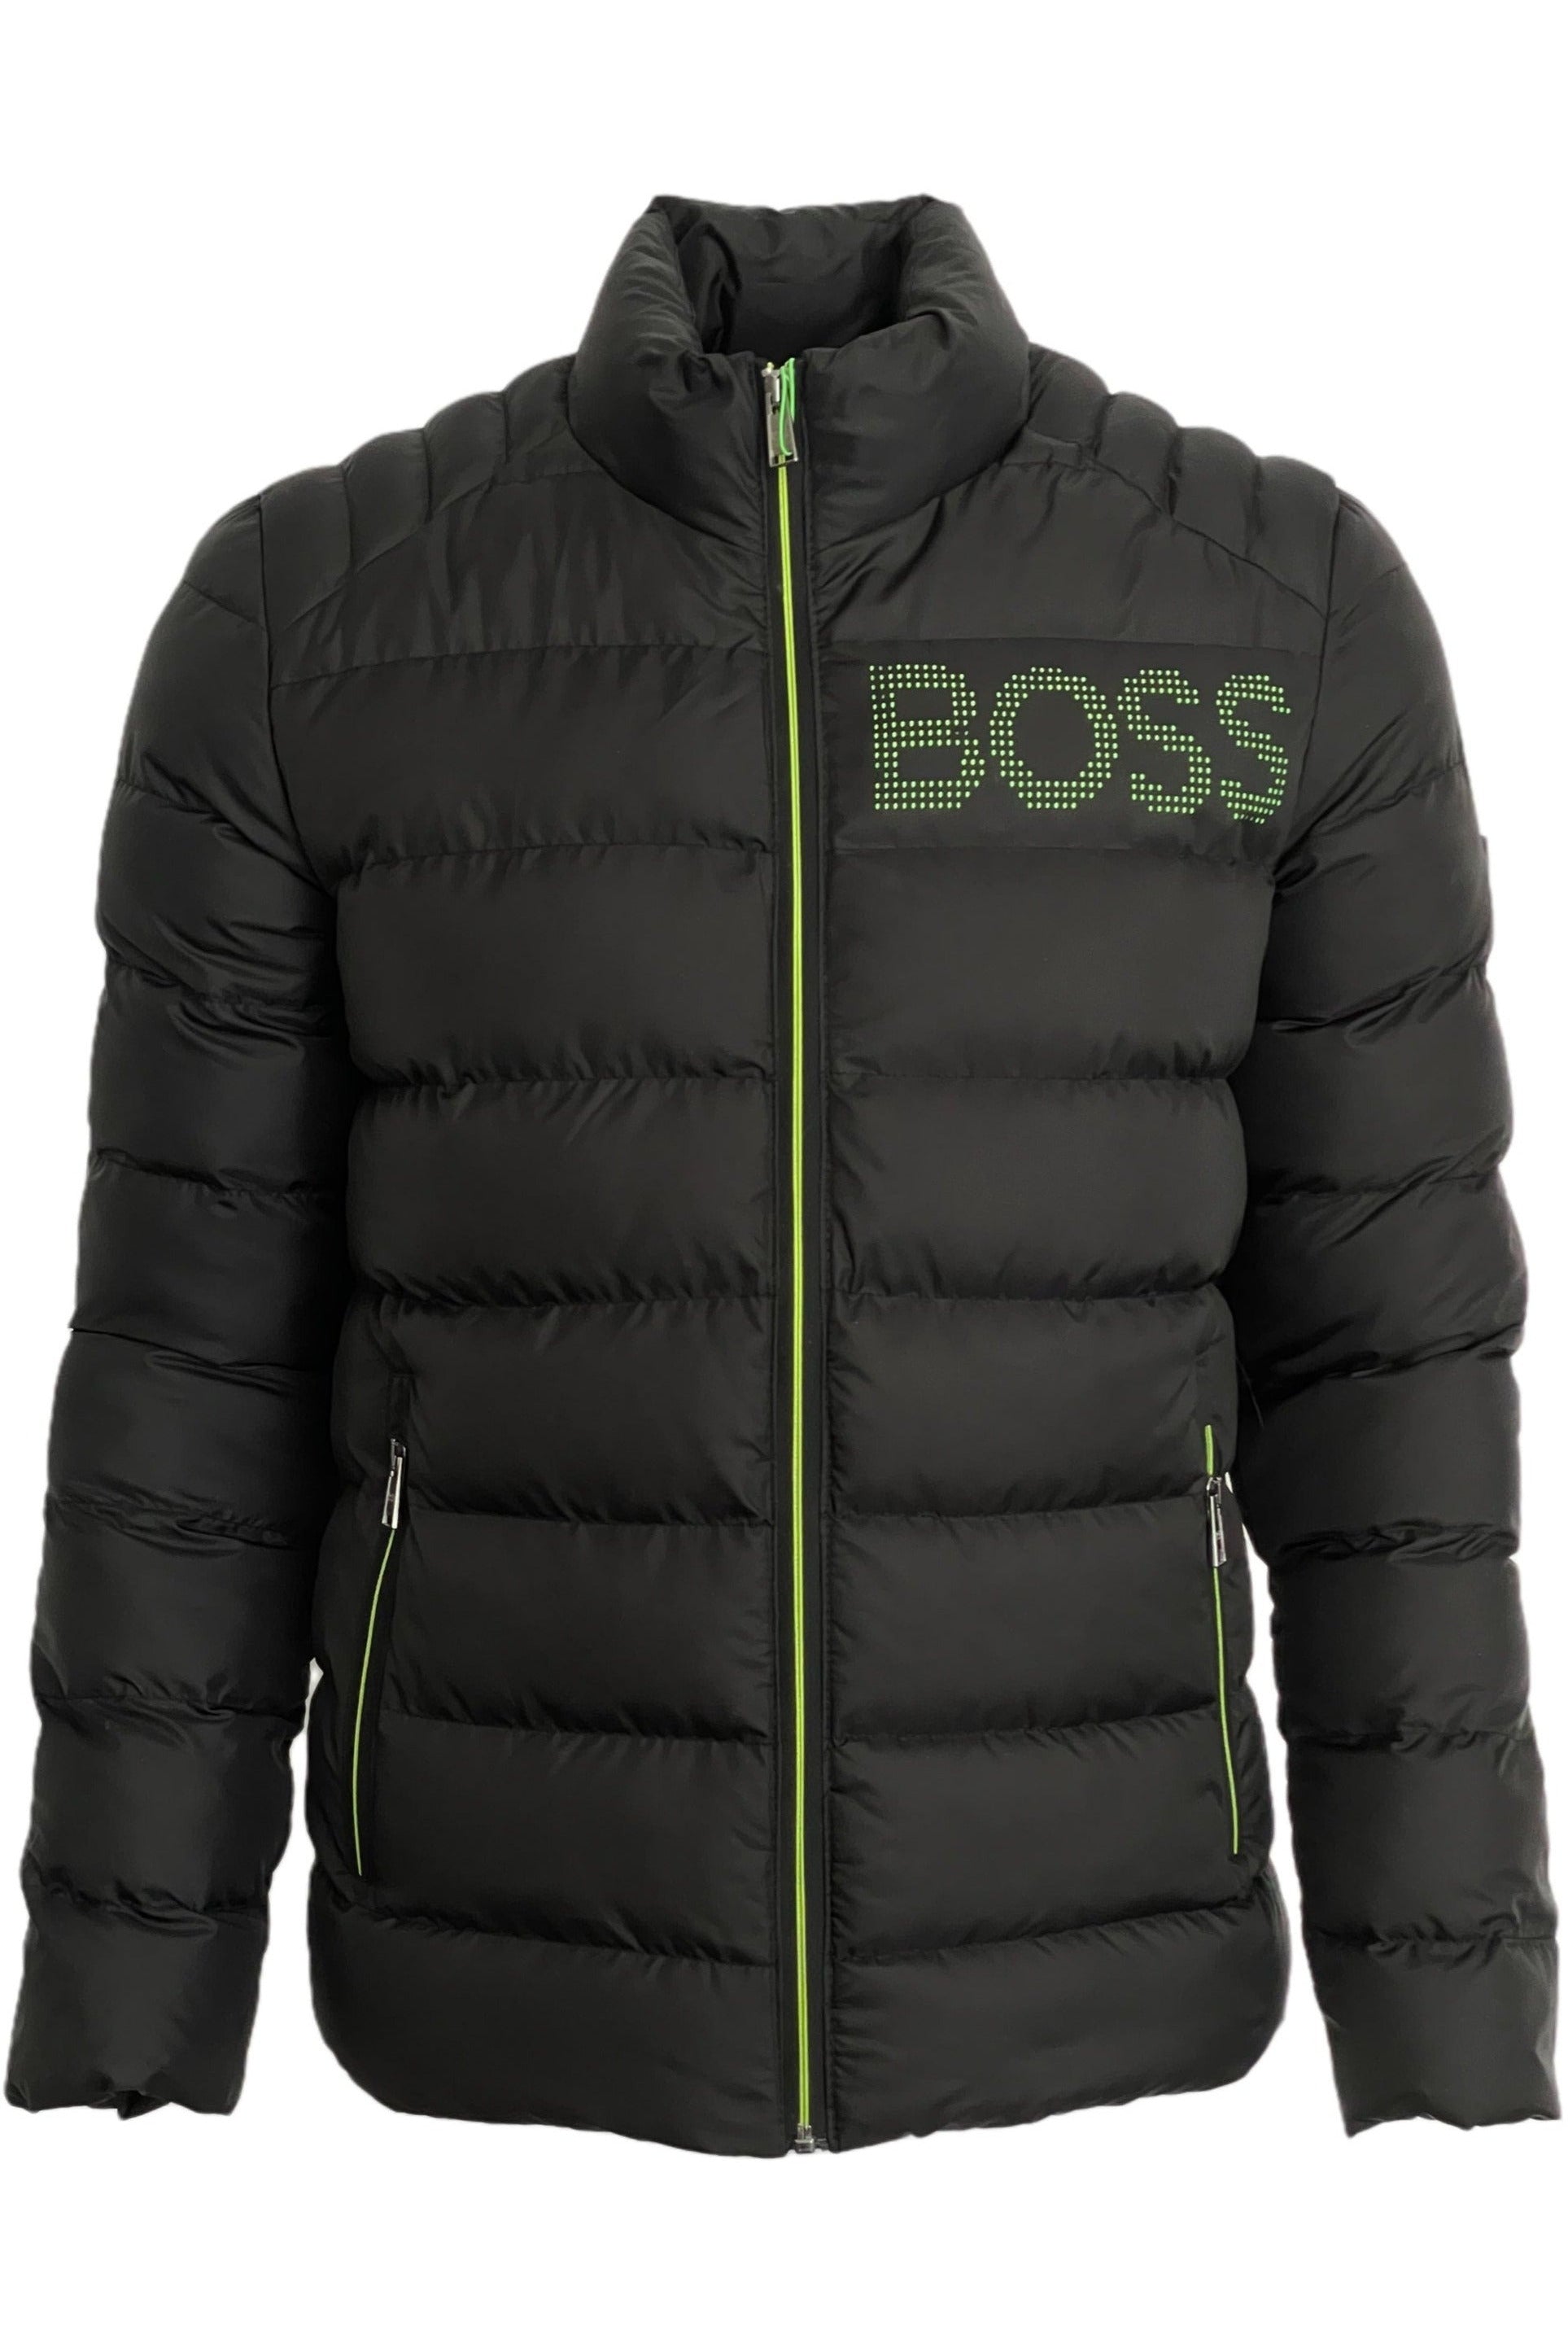 solid Pasture Strålende Hugo Boss Puffer Jacket in Black – Giltenergy